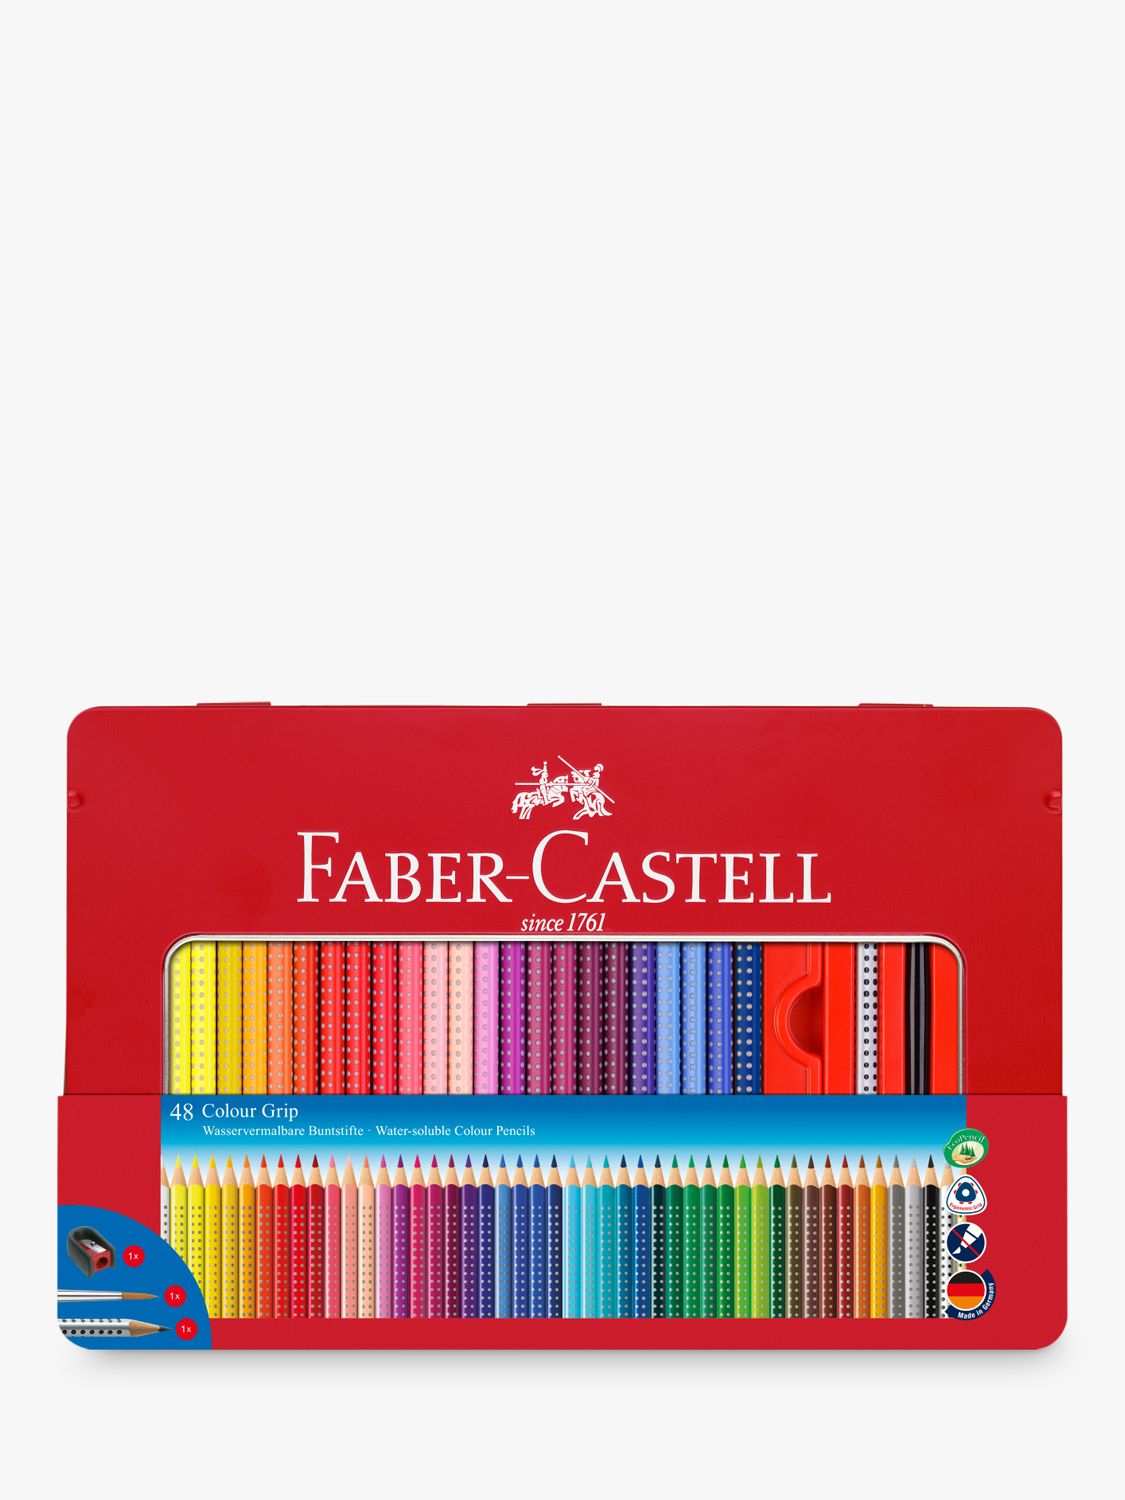 Faber-Castell 48 Aquarelle Design Series Full Length Water Color Pencils